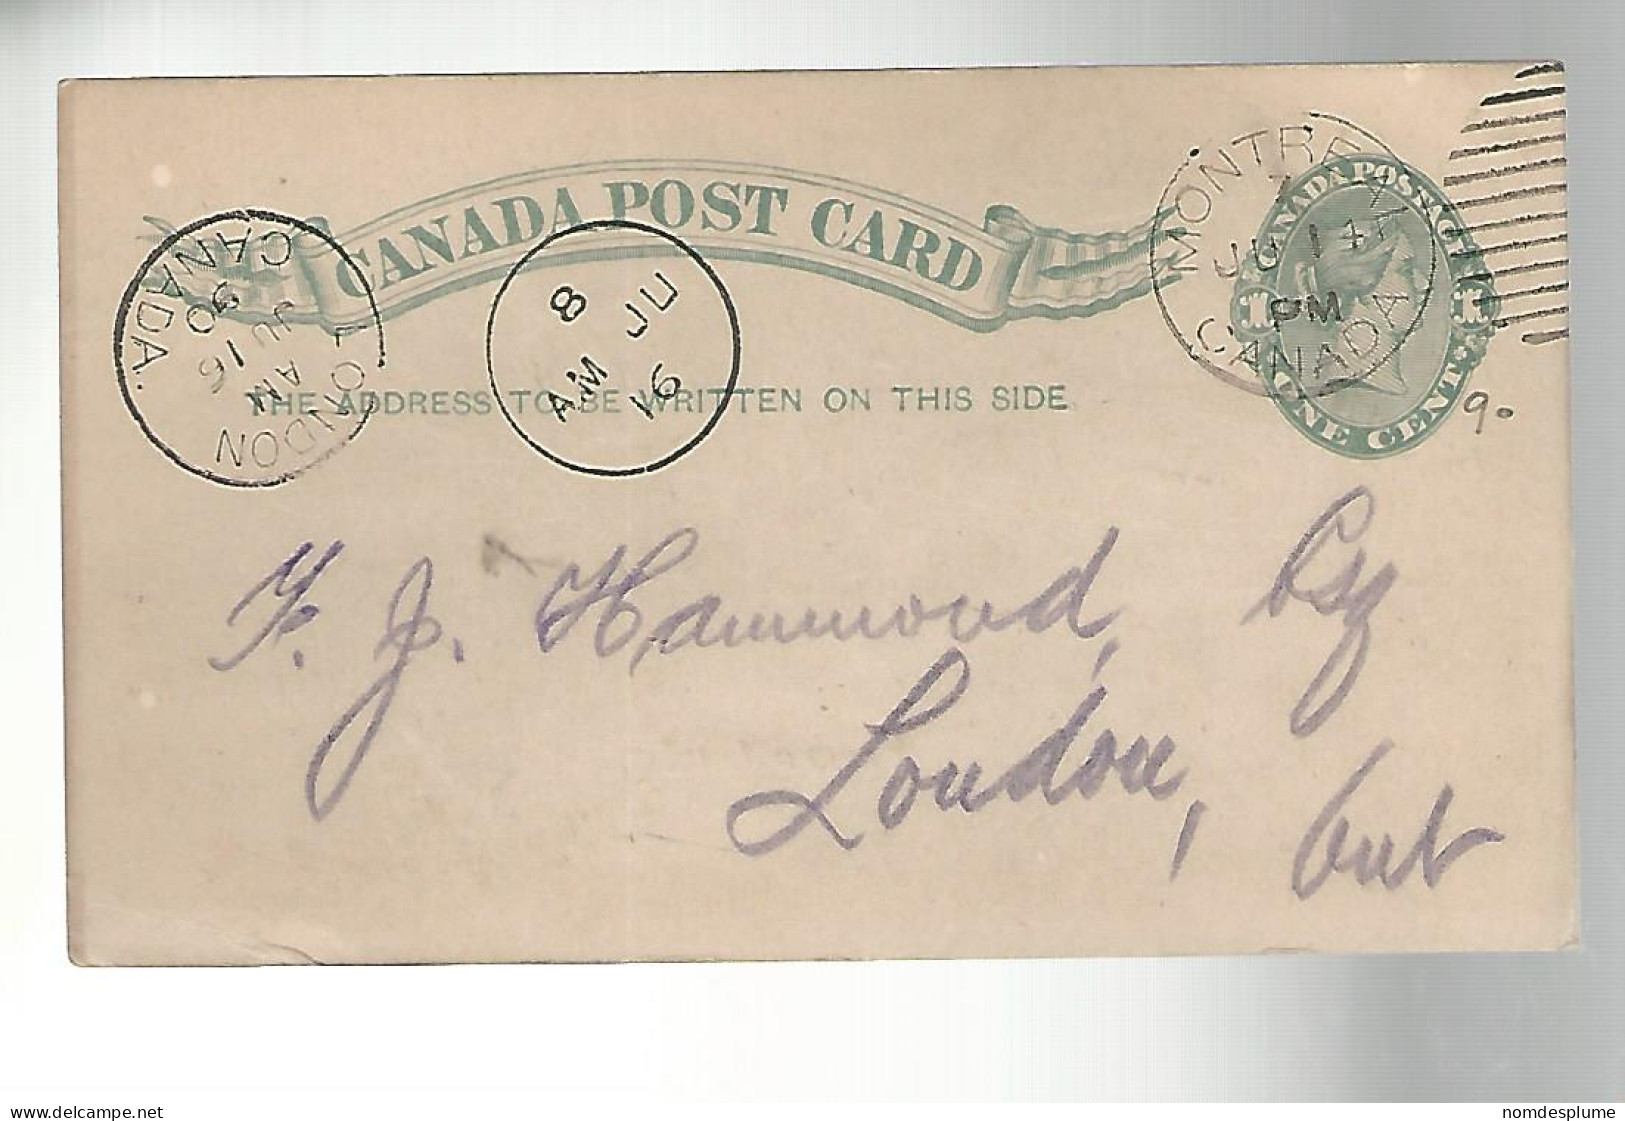 52890 ) Canada Postal Stationery Montreal London Postmarks  Duplex 1890 - 1860-1899 Règne De Victoria